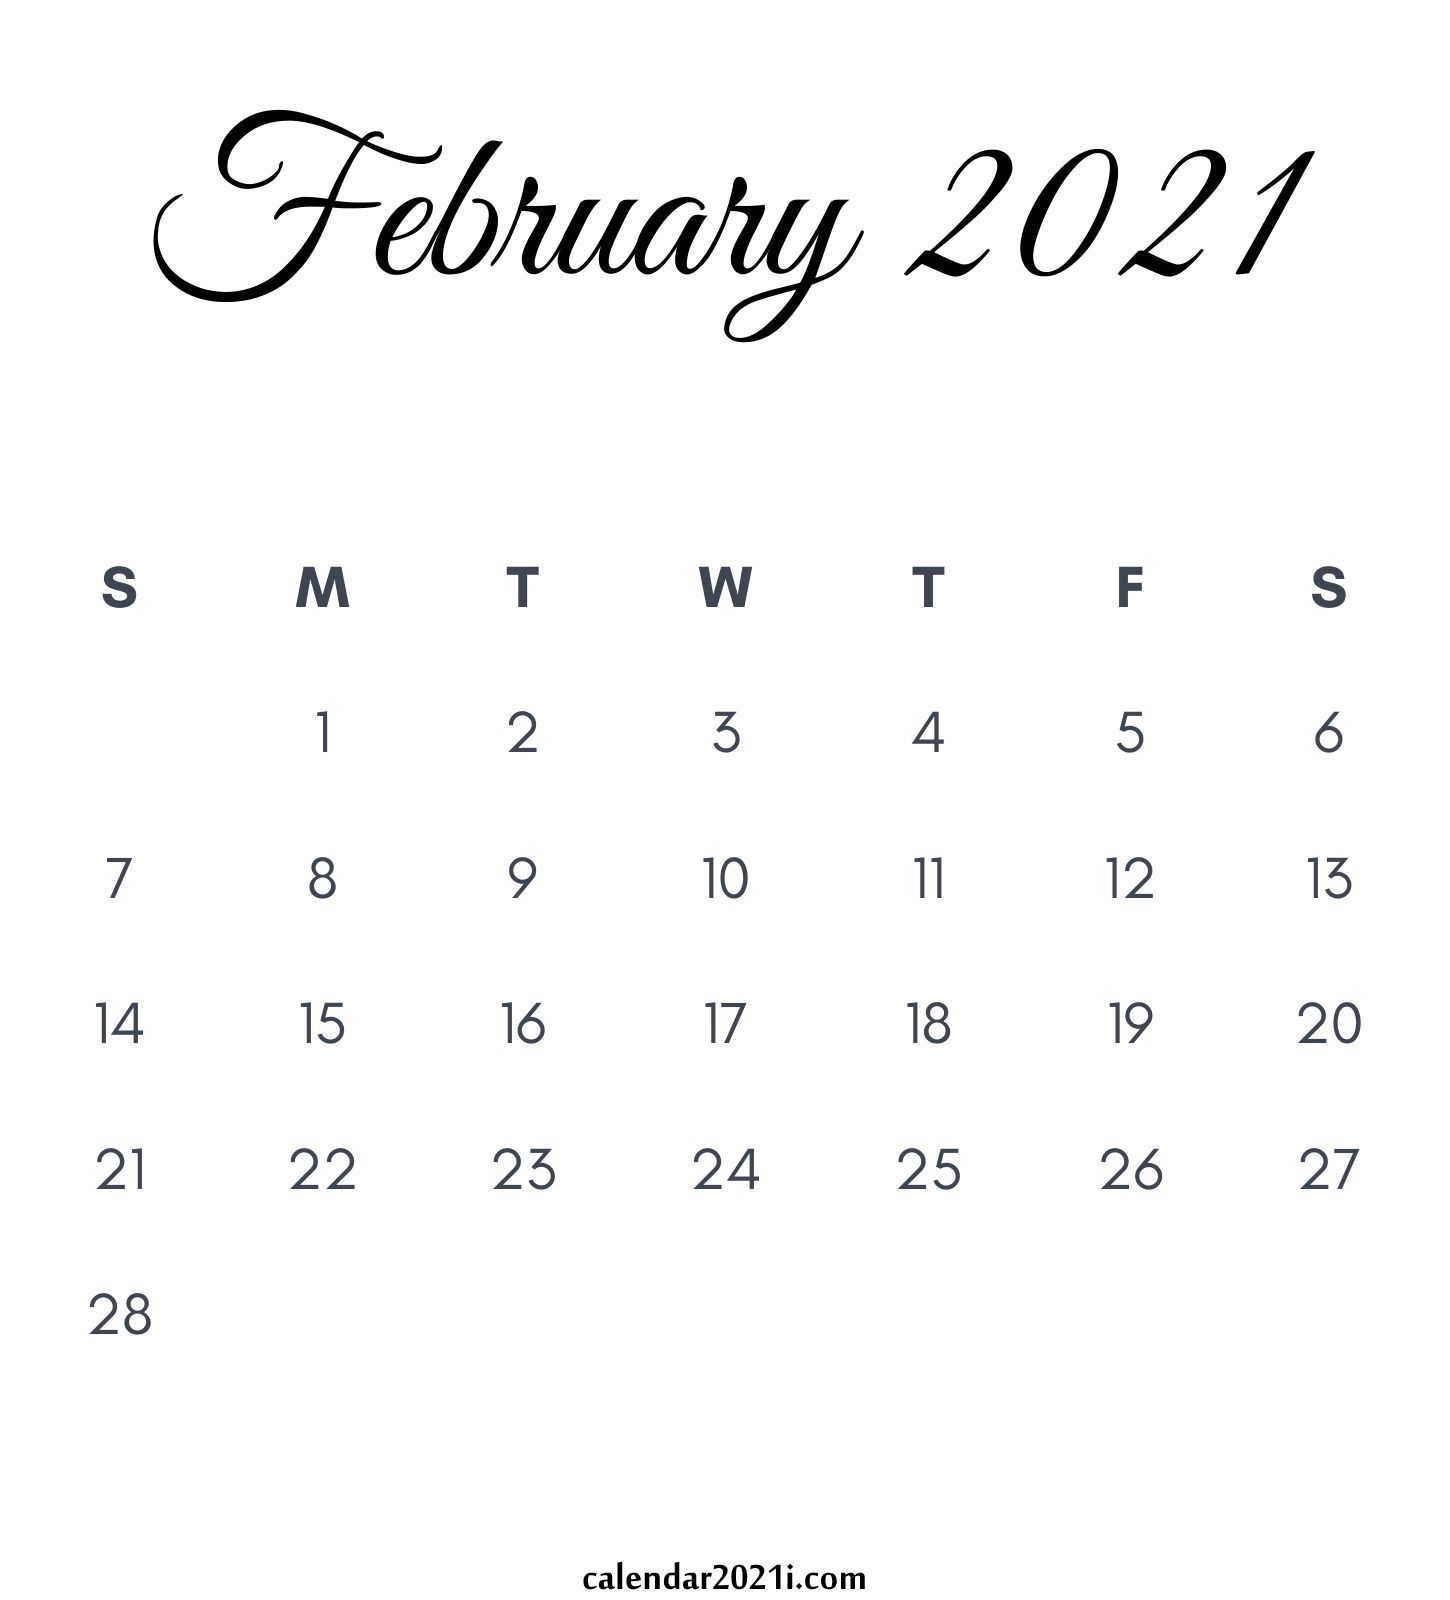 February 2021 Calendar: Printable, Floral, Holidays, Wallpaper, Design & More